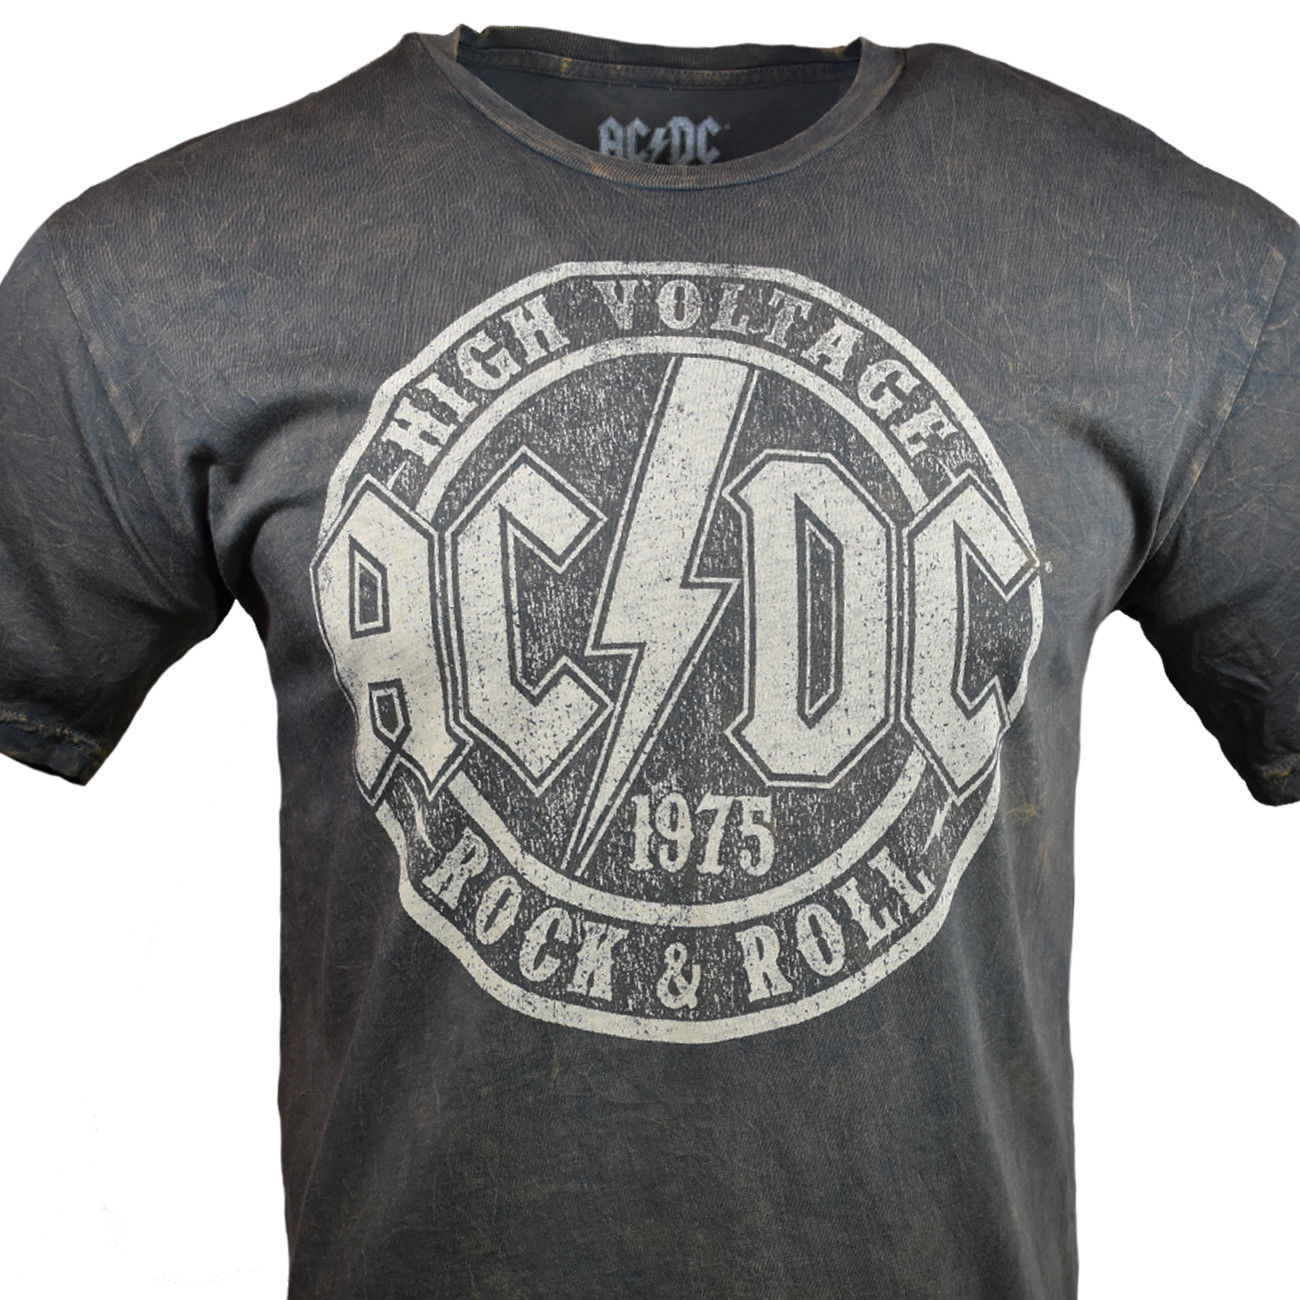 AC/DC High Voltage Rock & Roll 1975 Men's Graphic T-Shirt, Vintage Grey